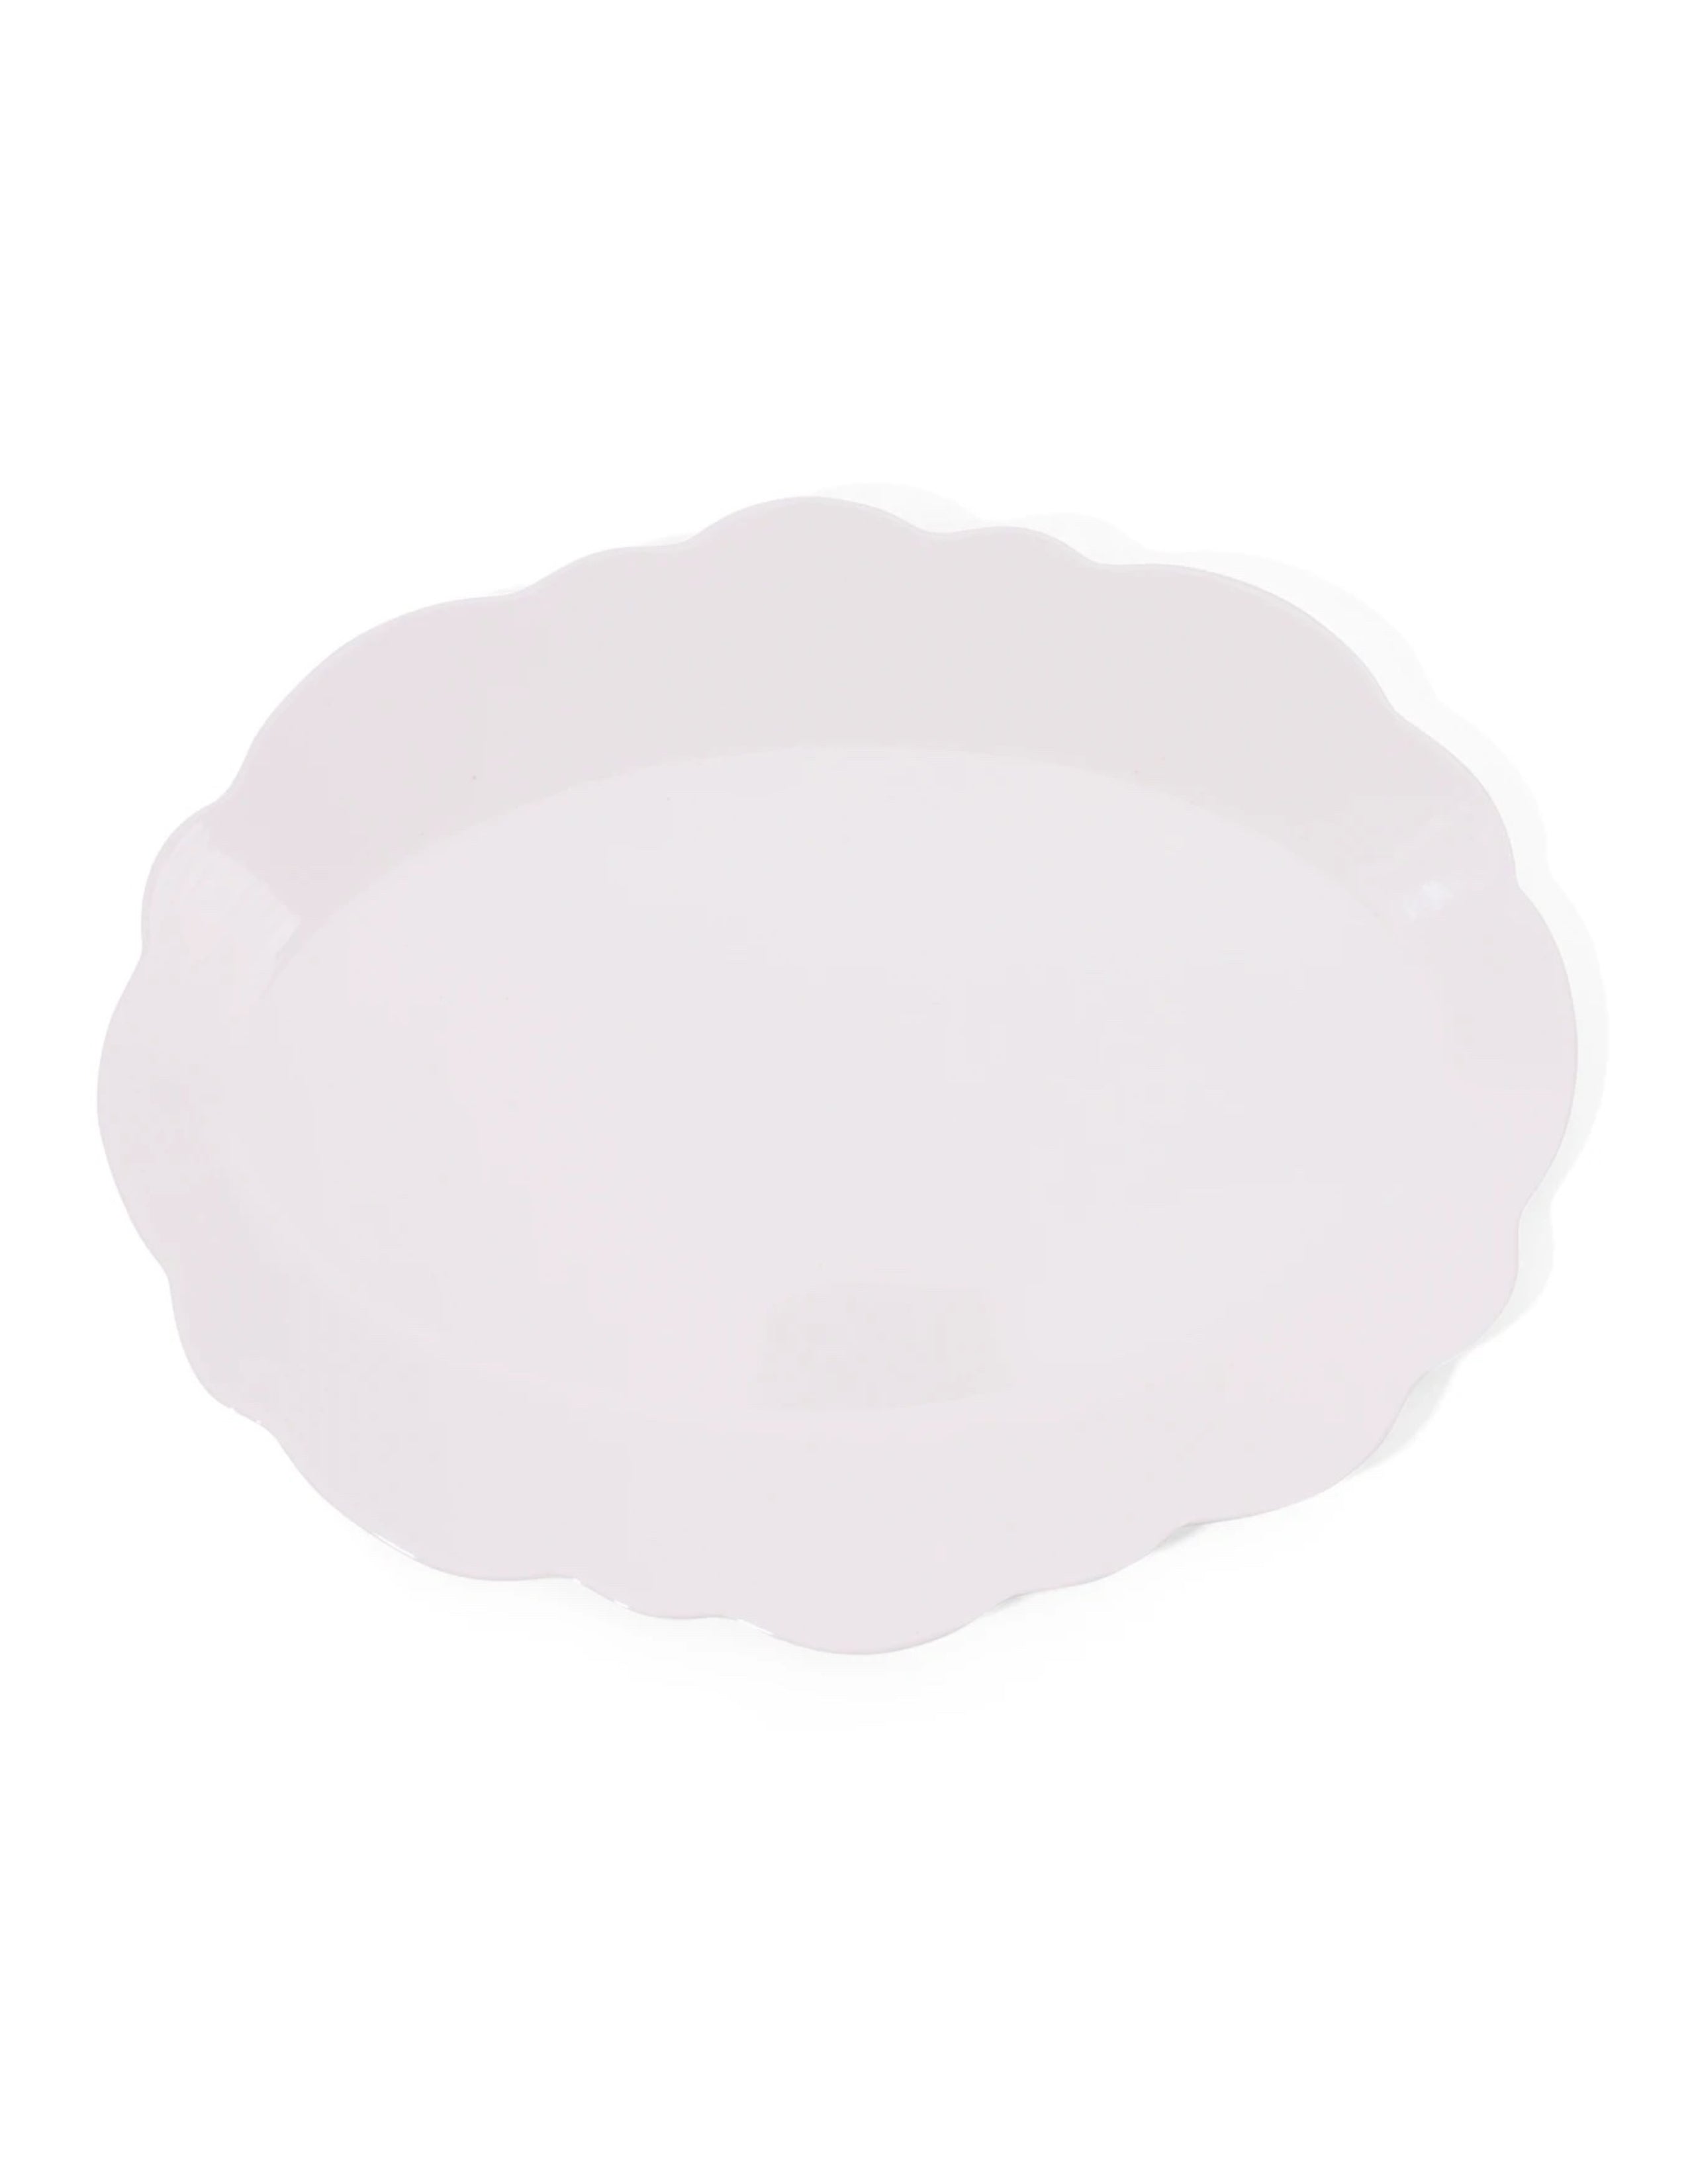 Scalloped Oval Serving Platter - Cream